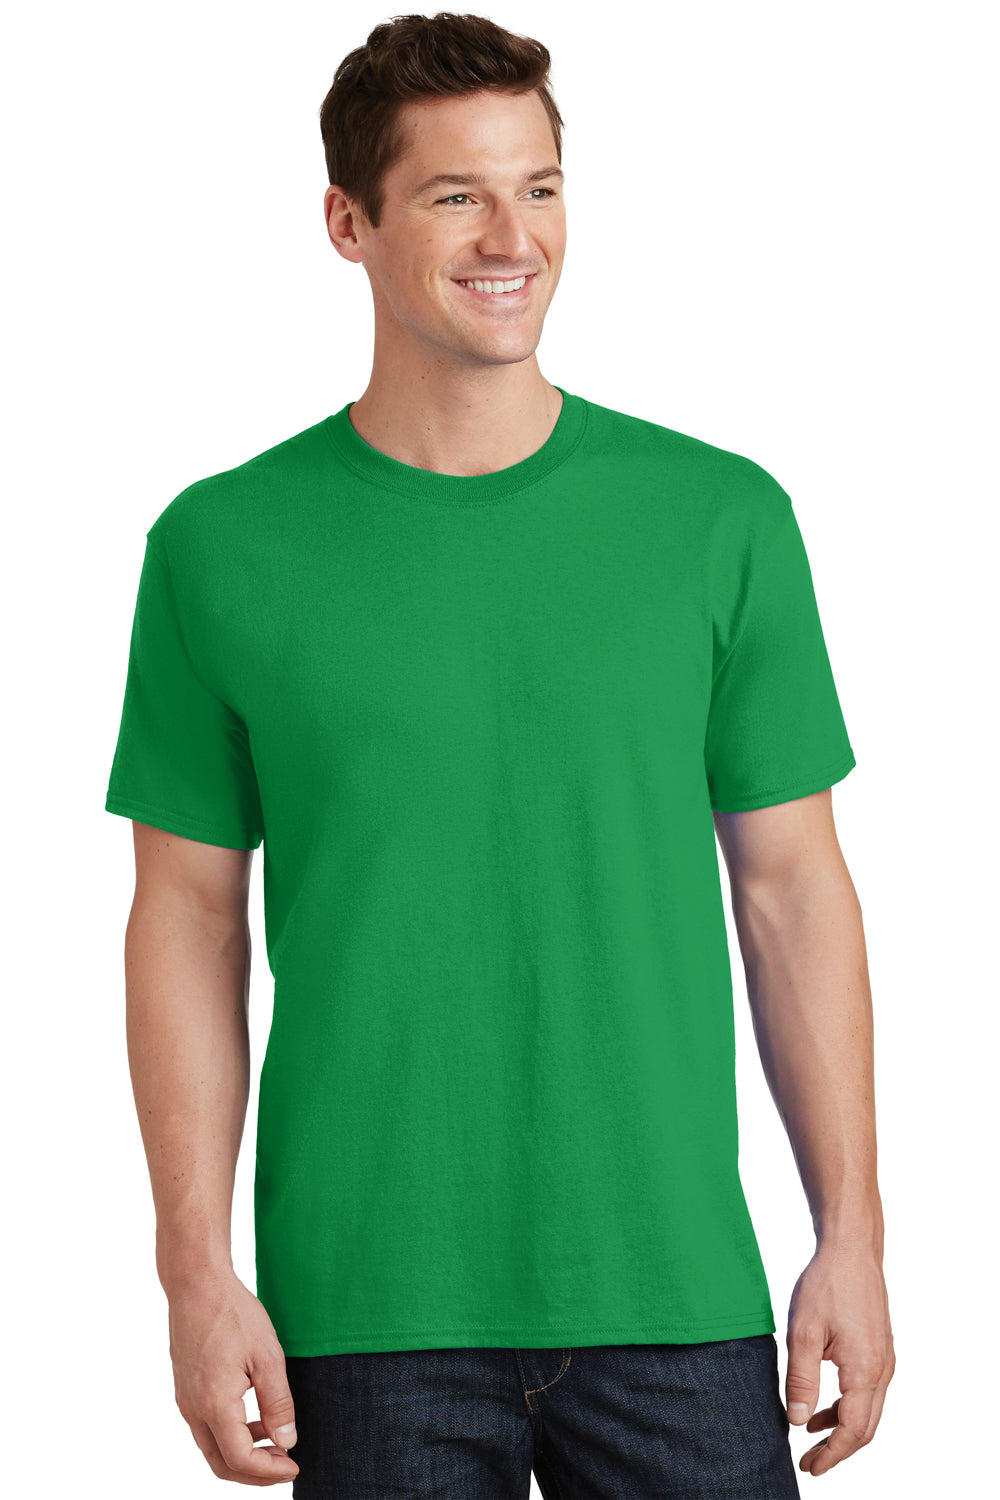 Port & Company PC54 Mens Core Short Sleeve Crewneck T-Shirt Clover Green Front